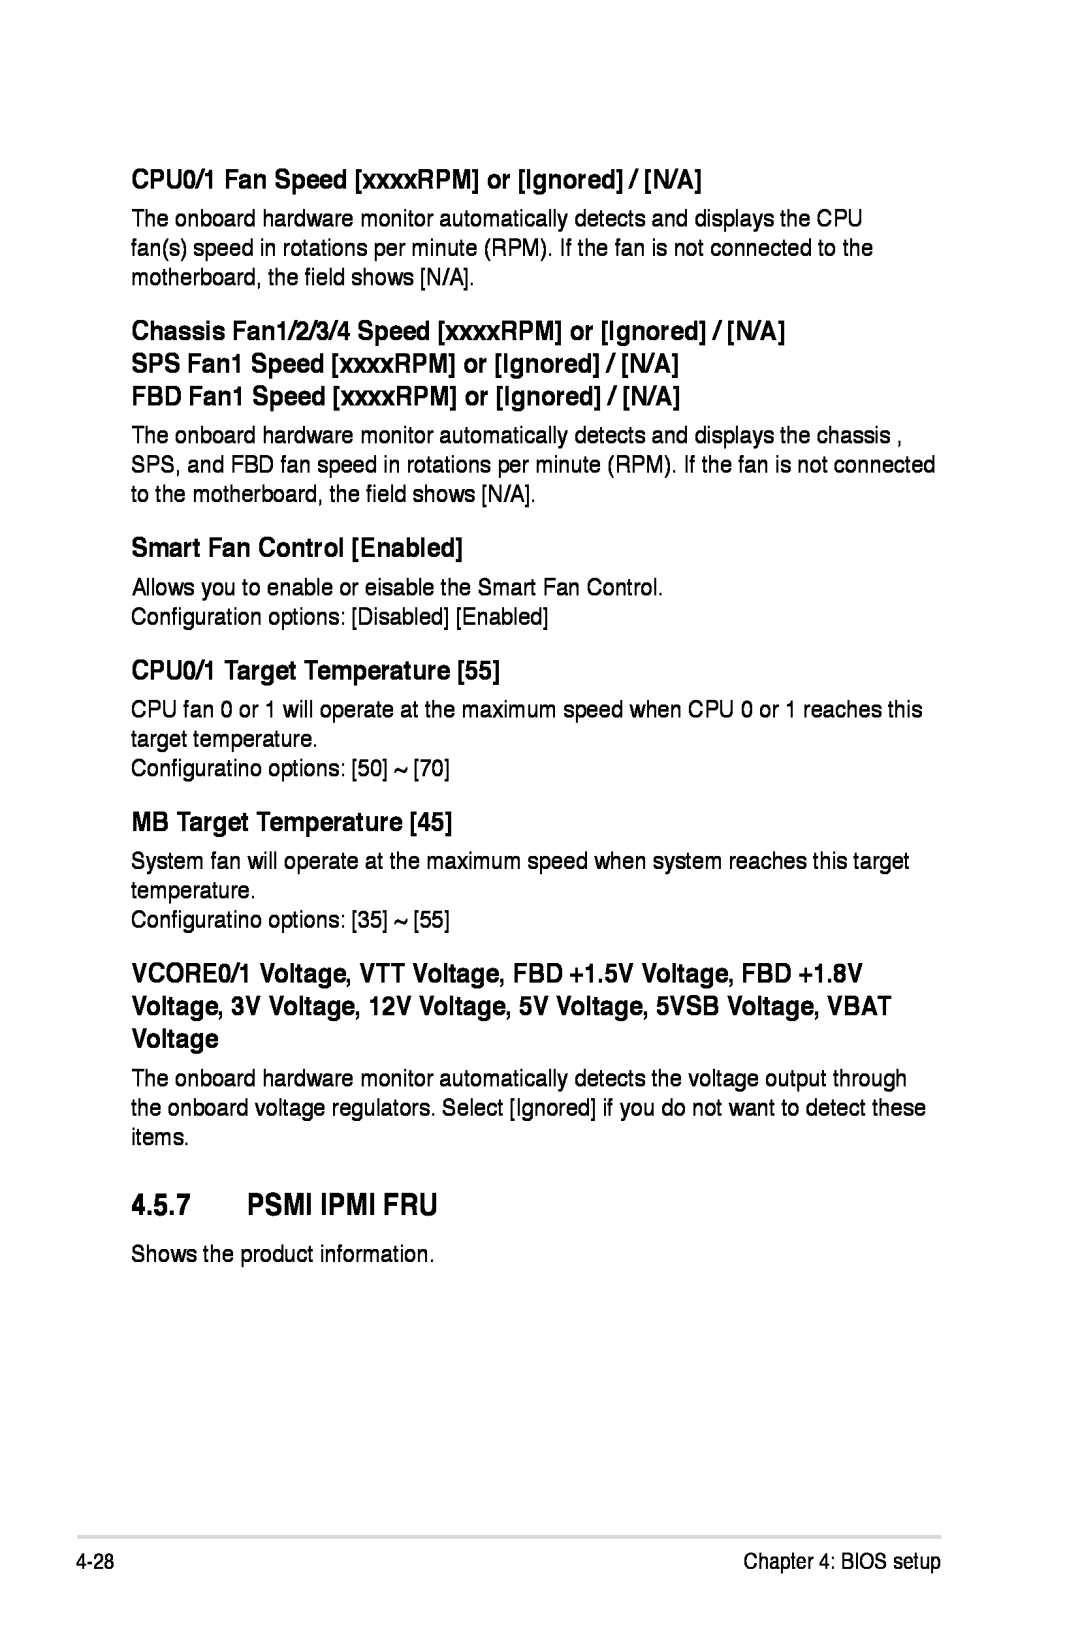 Asus Z7S WS manual Psmi Ipmi Fru, CPU0/1 Fan Speed xxxxRPM or Ignored / N/A, FBD Fan1 Speed xxxxRPM or Ignored / N/A 